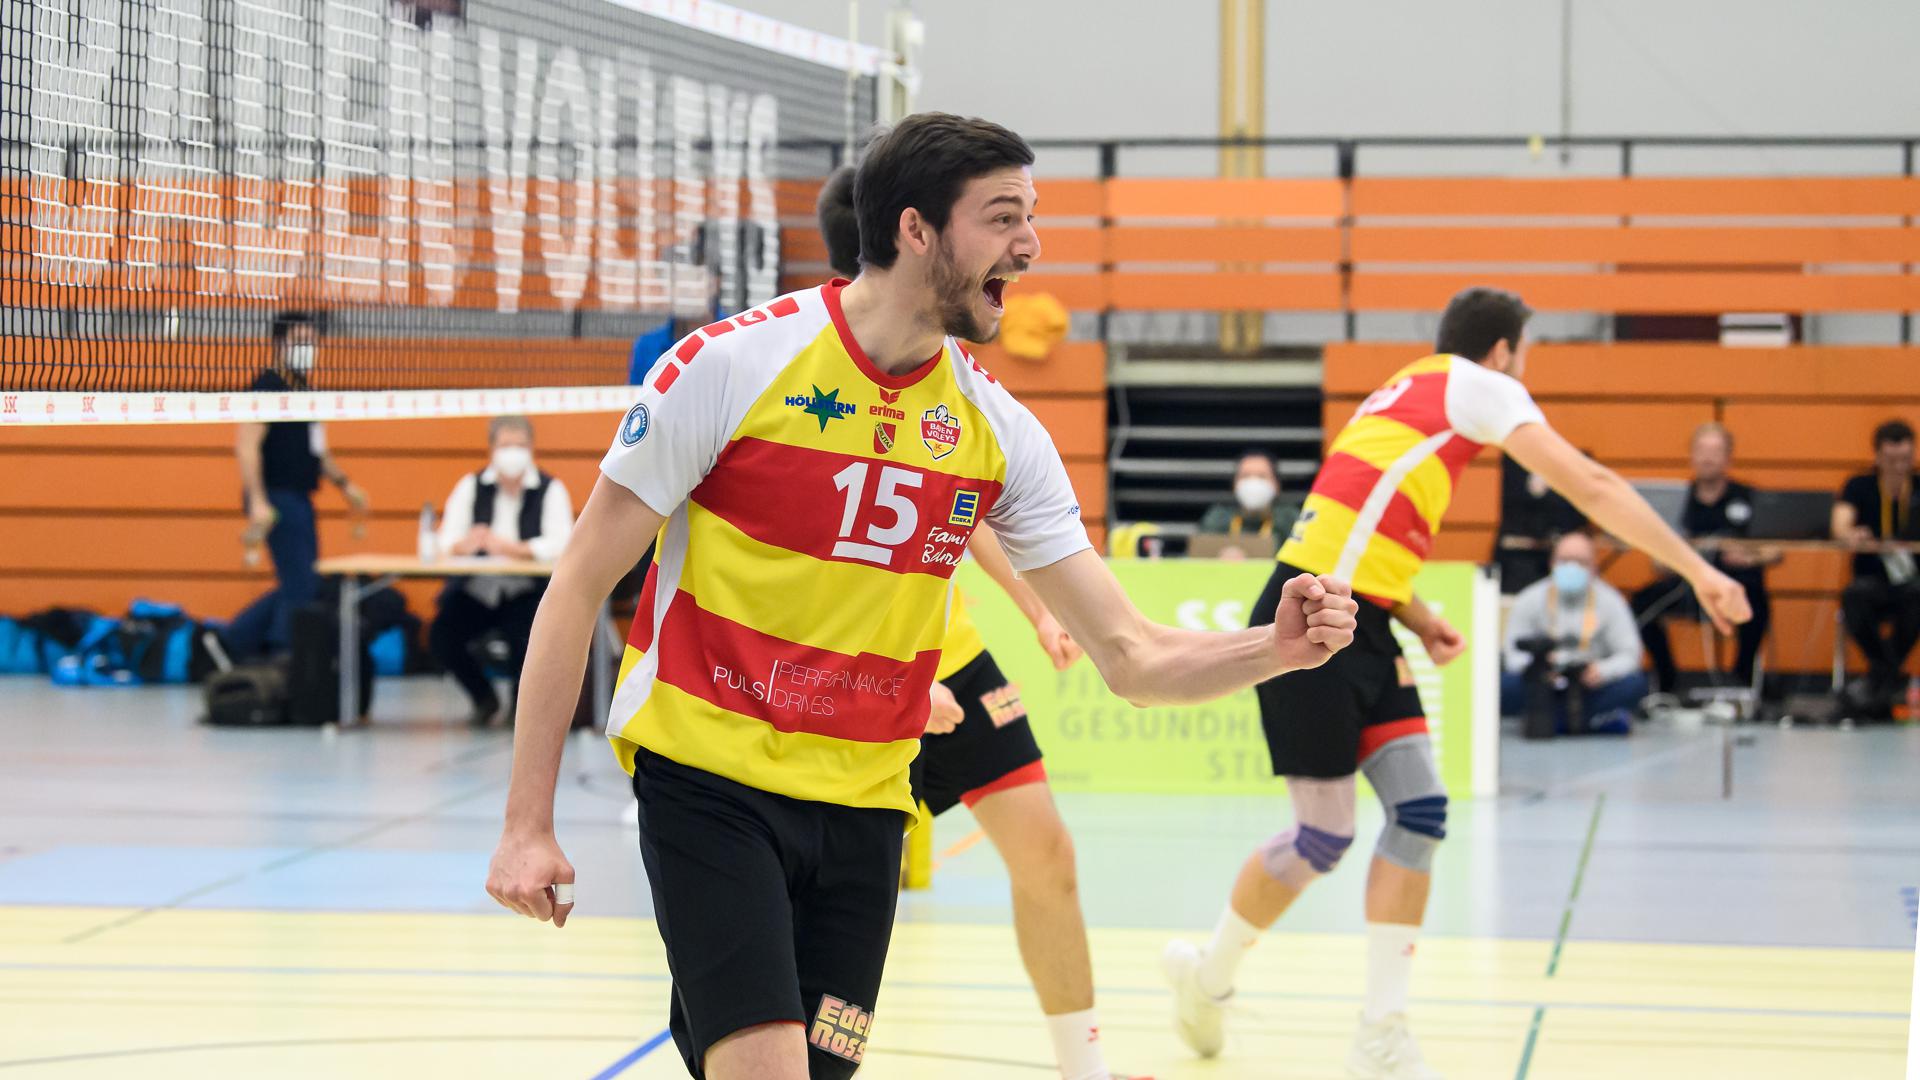 Jubel beim SSC, Mitte: Jens Sandmeier (SSC).

GES/ Volleyball/ 2. Bundesliga-Sued: Baden Volleys SSC Karlsruhe - TV / DJK Hammelburg, 24.04.2021 --

